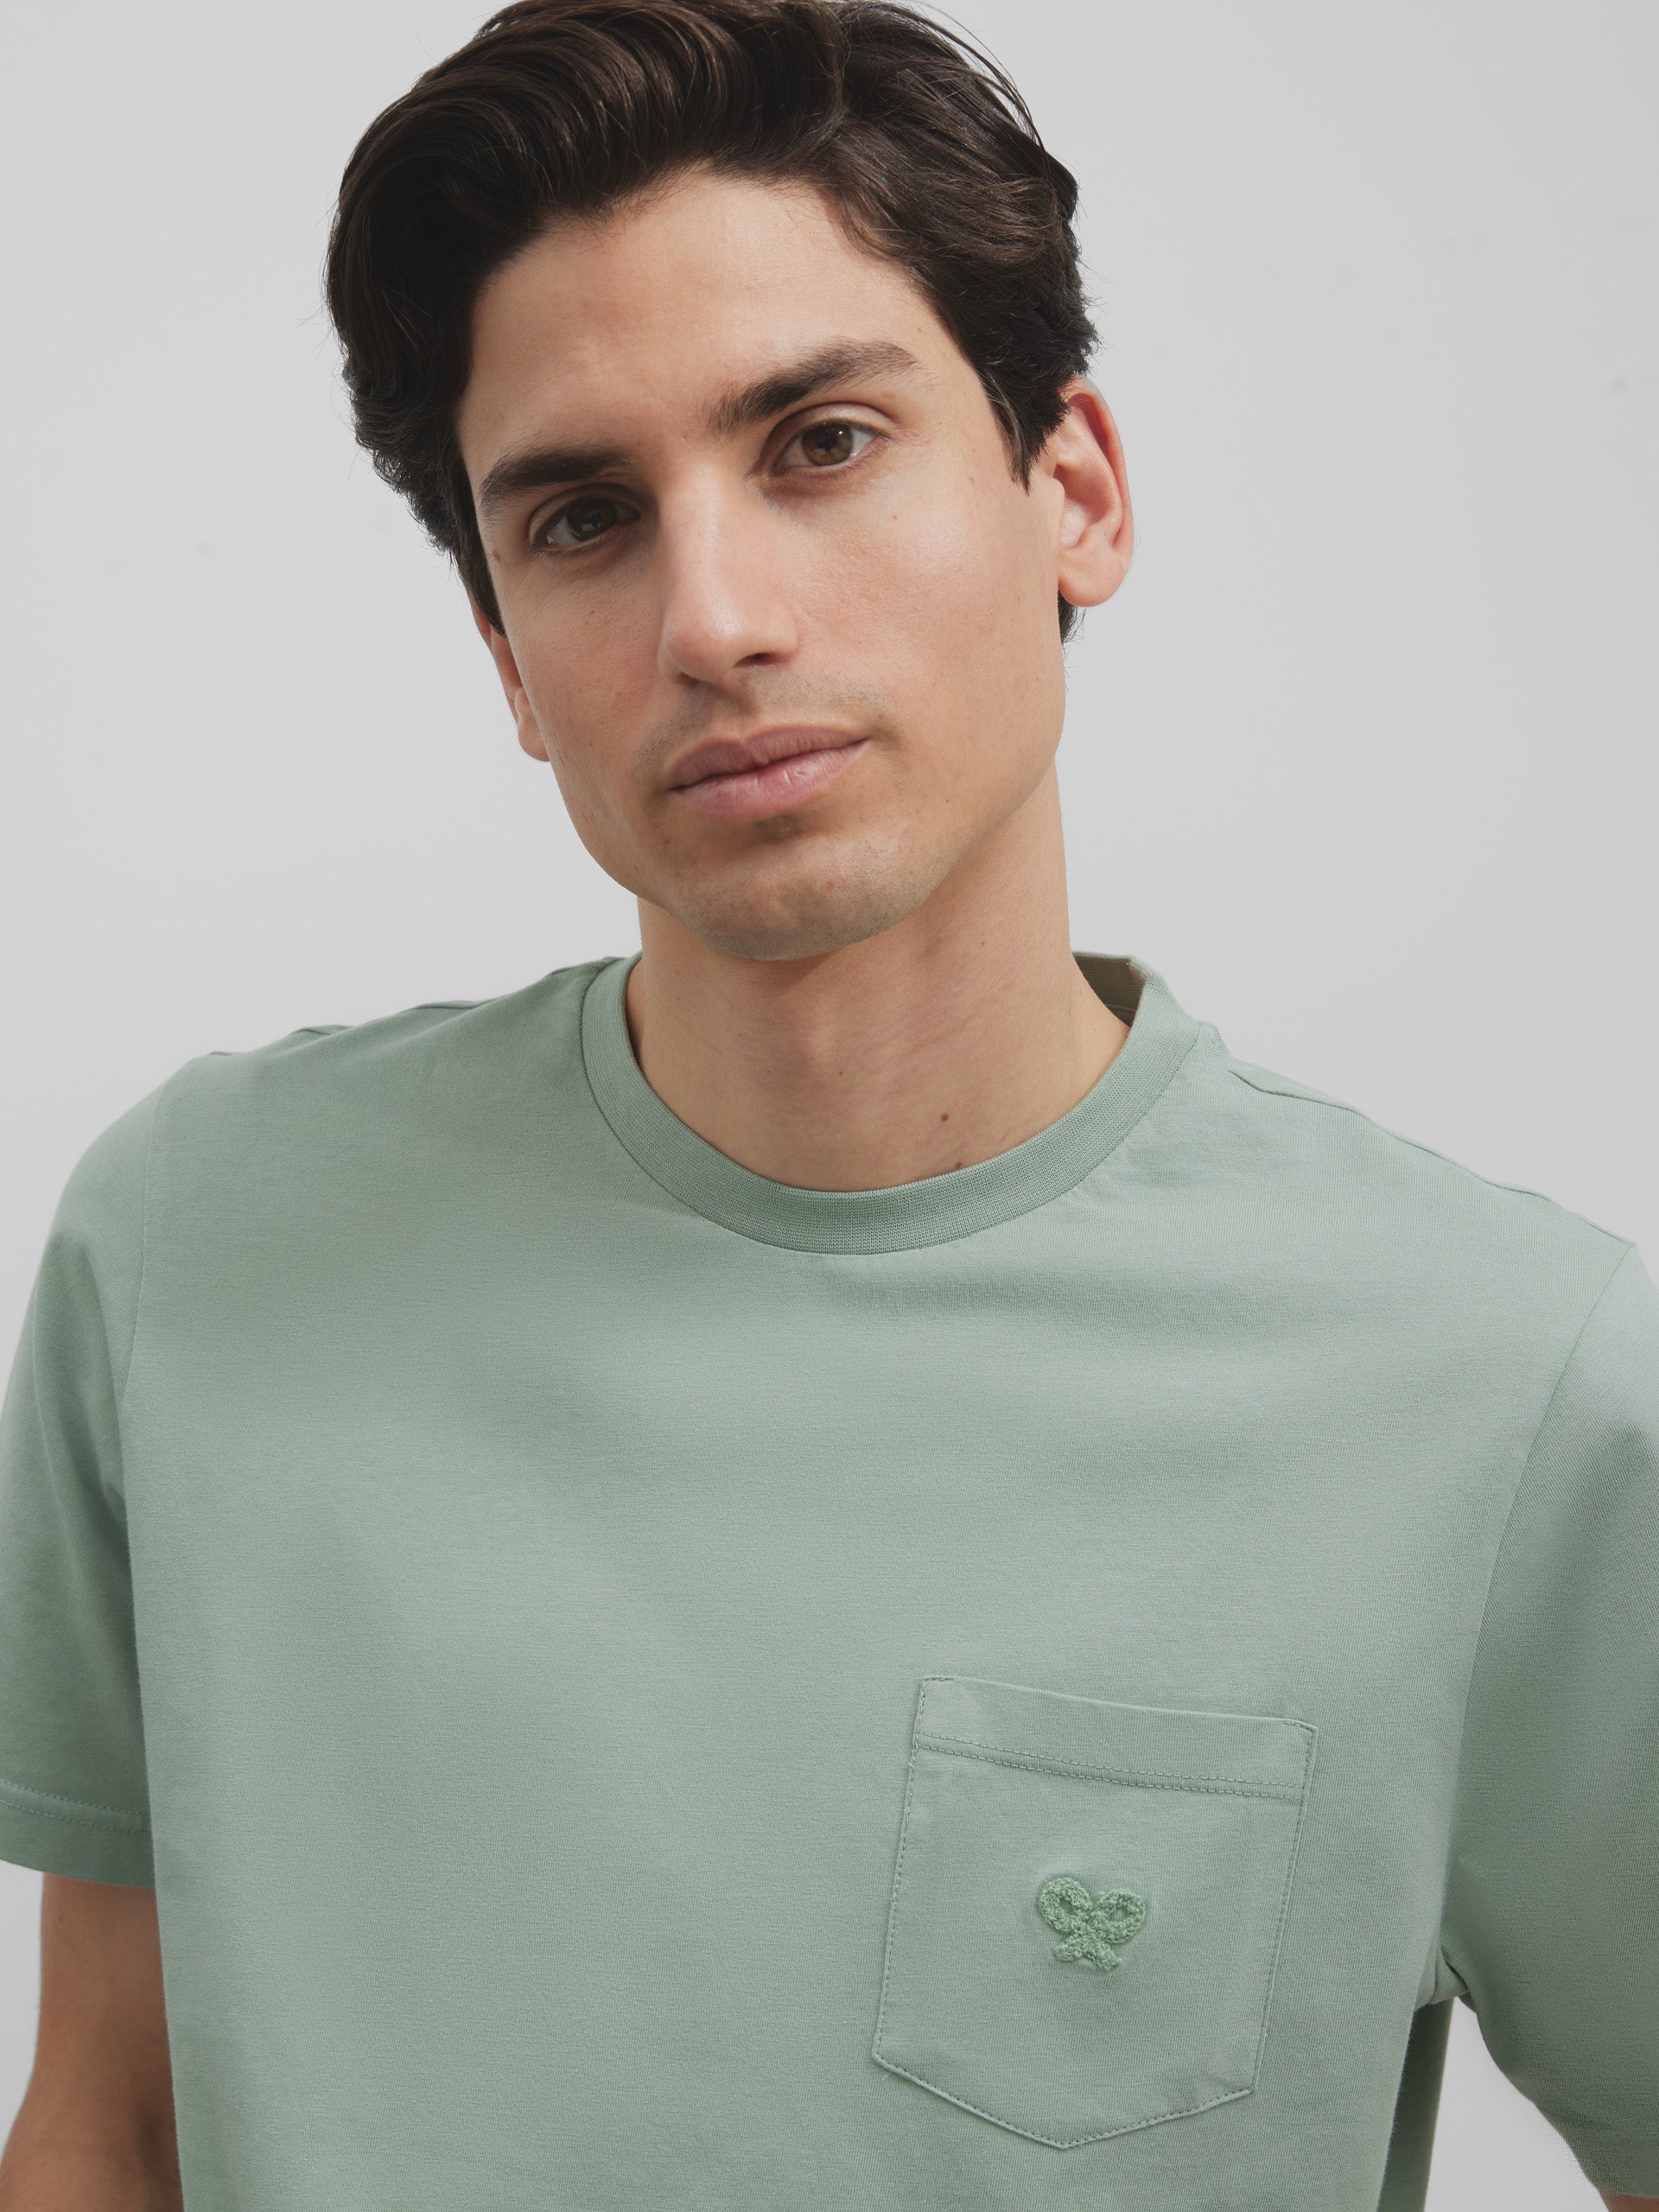 Green racket pocket t-shirt